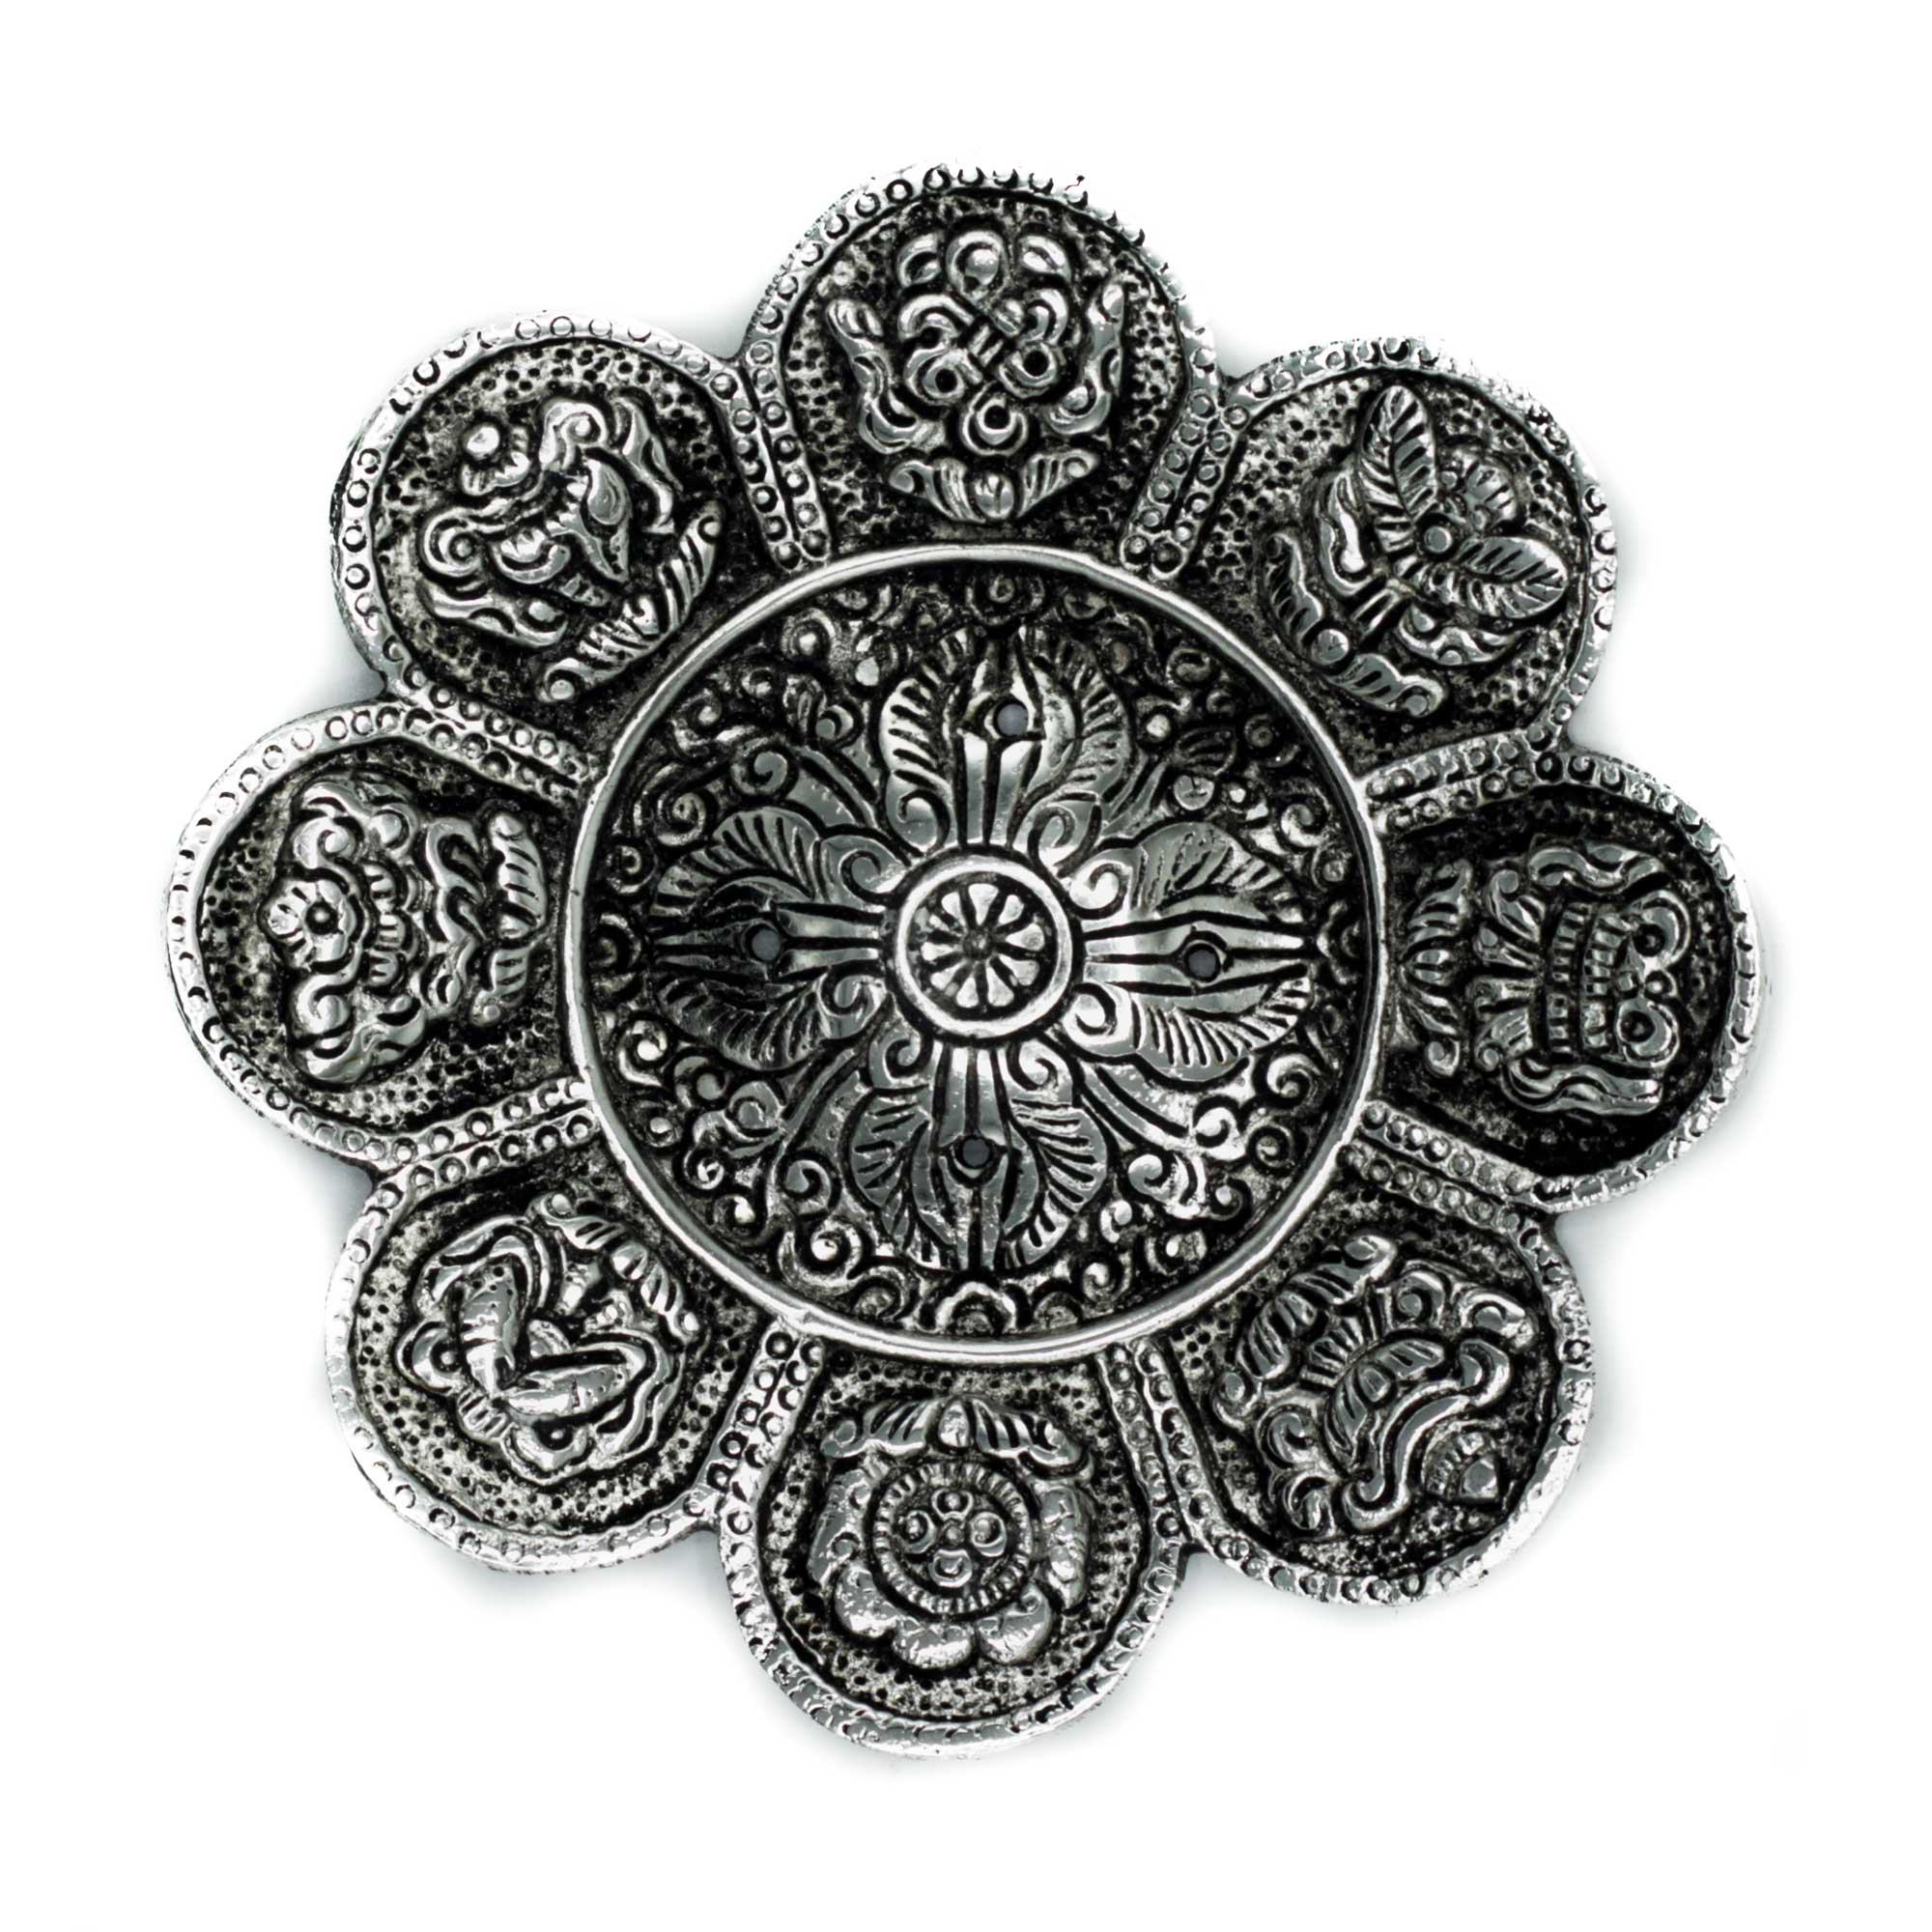 View Polished Aluminium Tibetan Symbols Incense Holder 12cm information